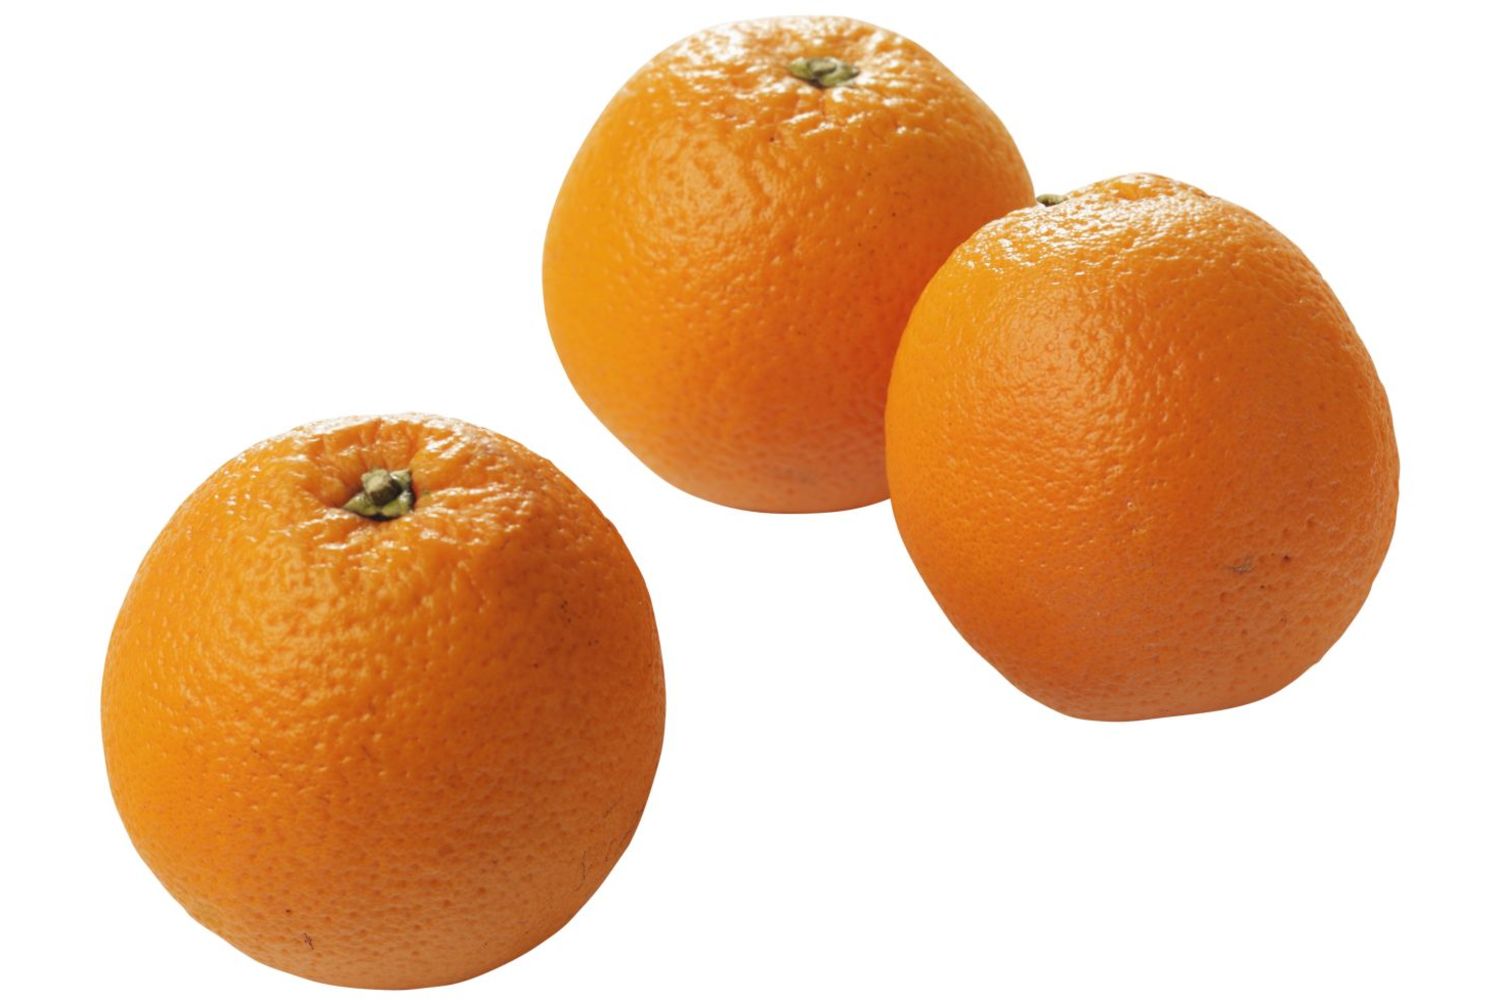 Perssinaasappels middel verpakt 10st stuk 1